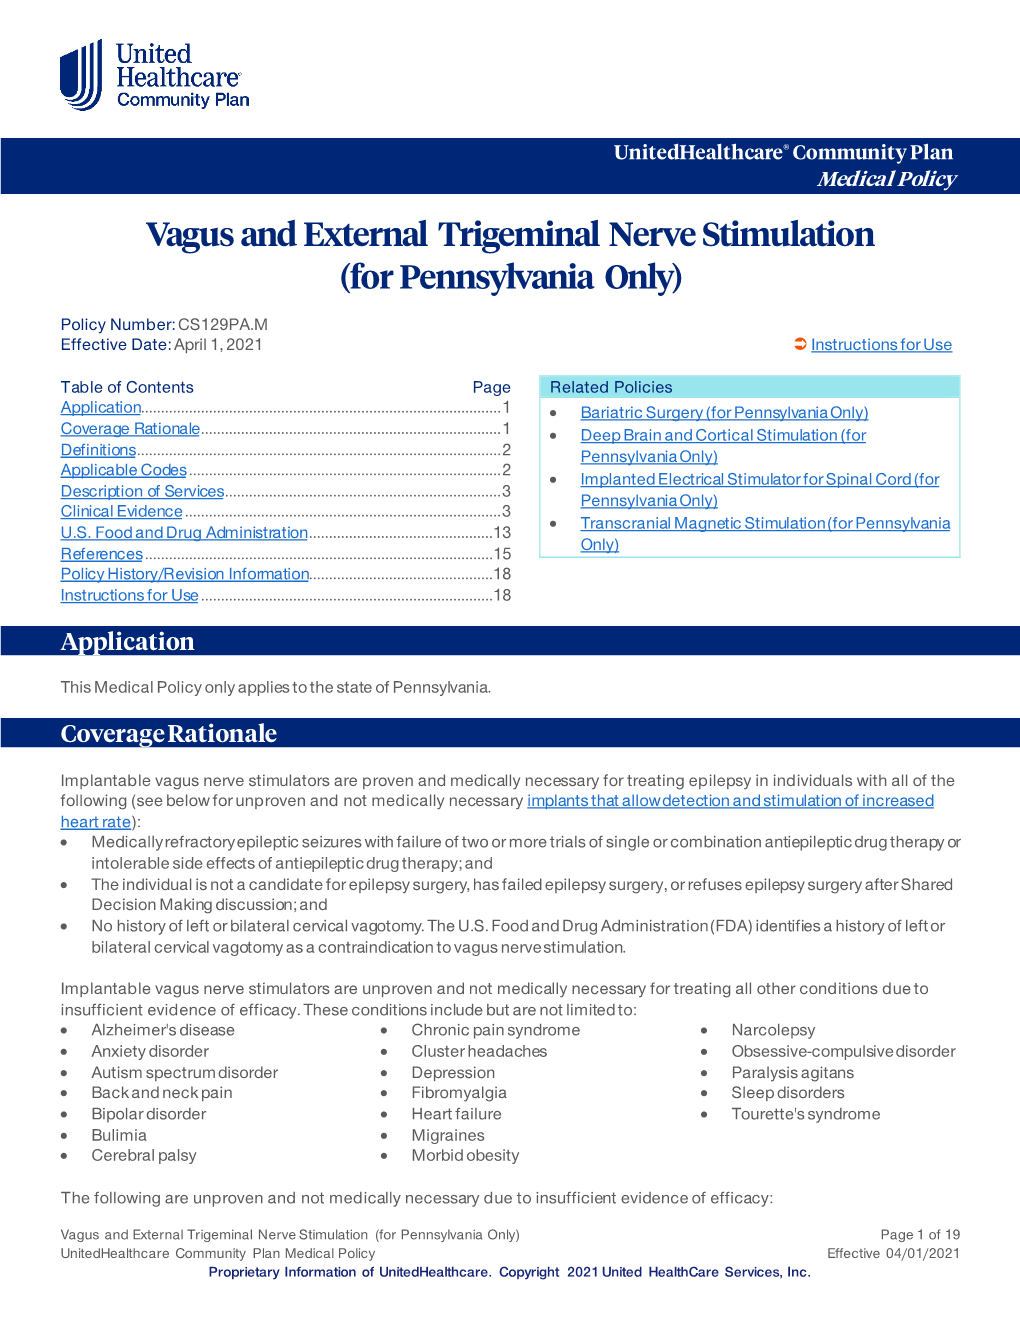 Vagus and External Trigeminal Nerve Stimulation (For Pennsylvania Only)